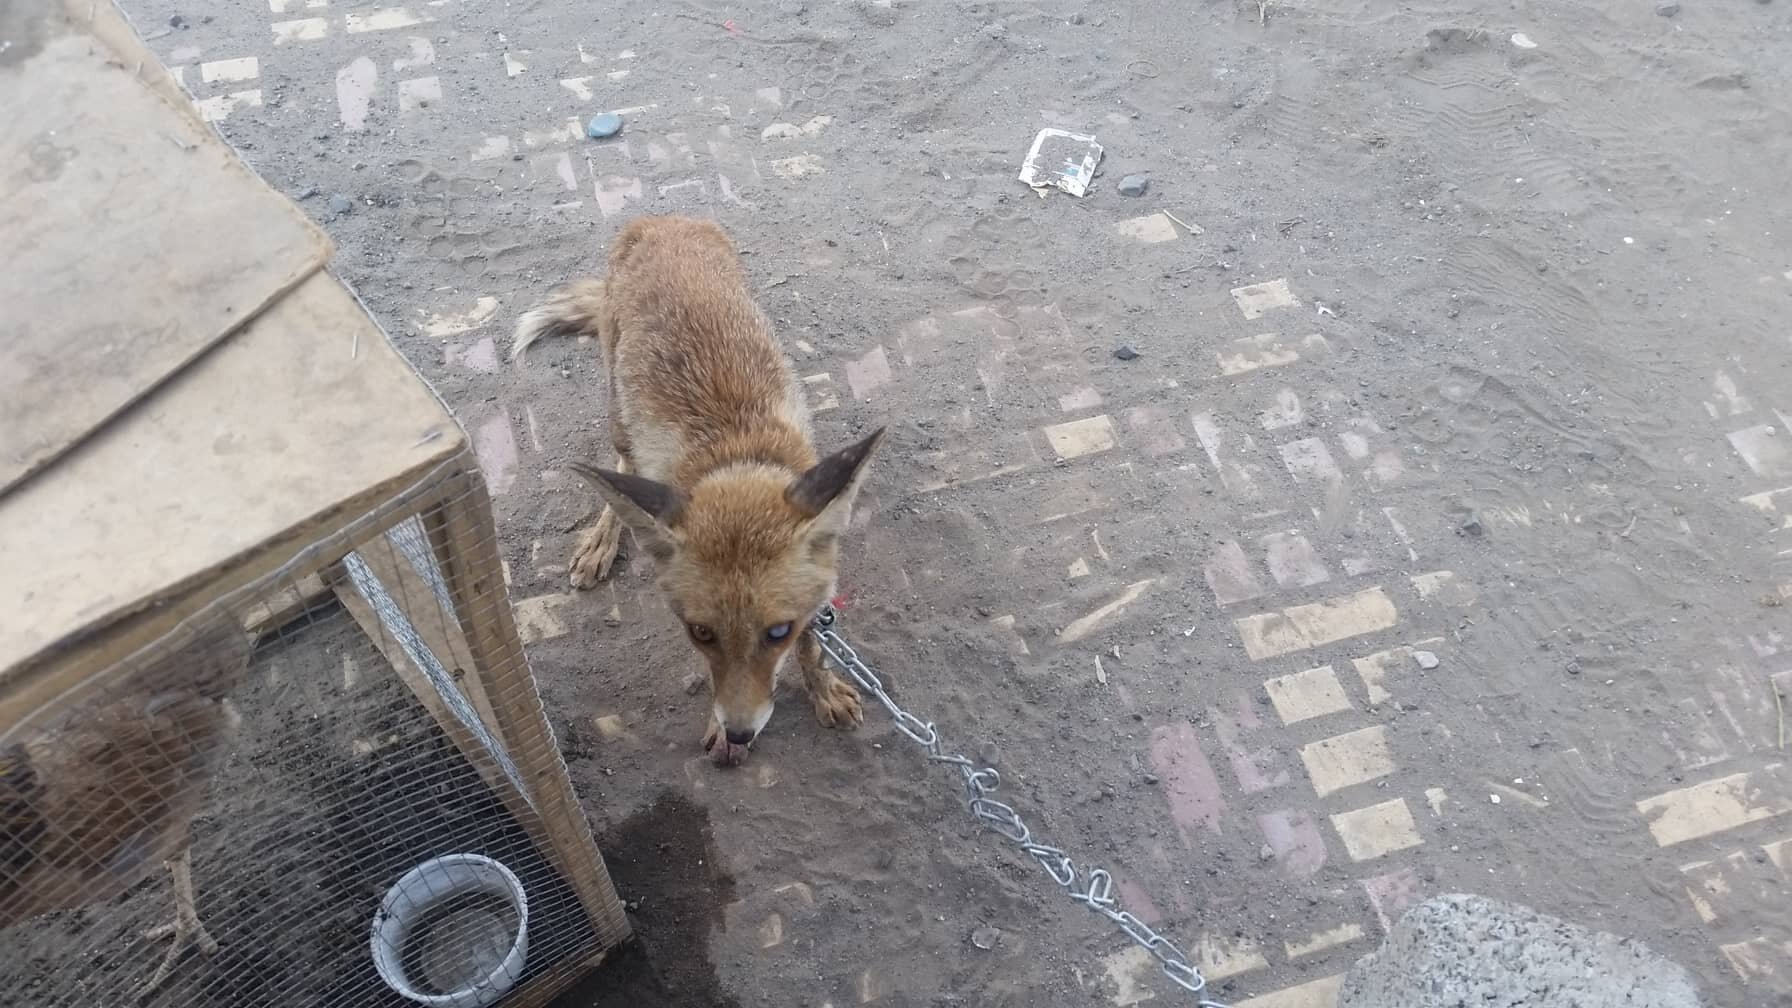 stray fox sana'a Yemen rescue OWAP-AR 21 FEB 2019 Hisham with man who wants to kill him  or sell him.jpg